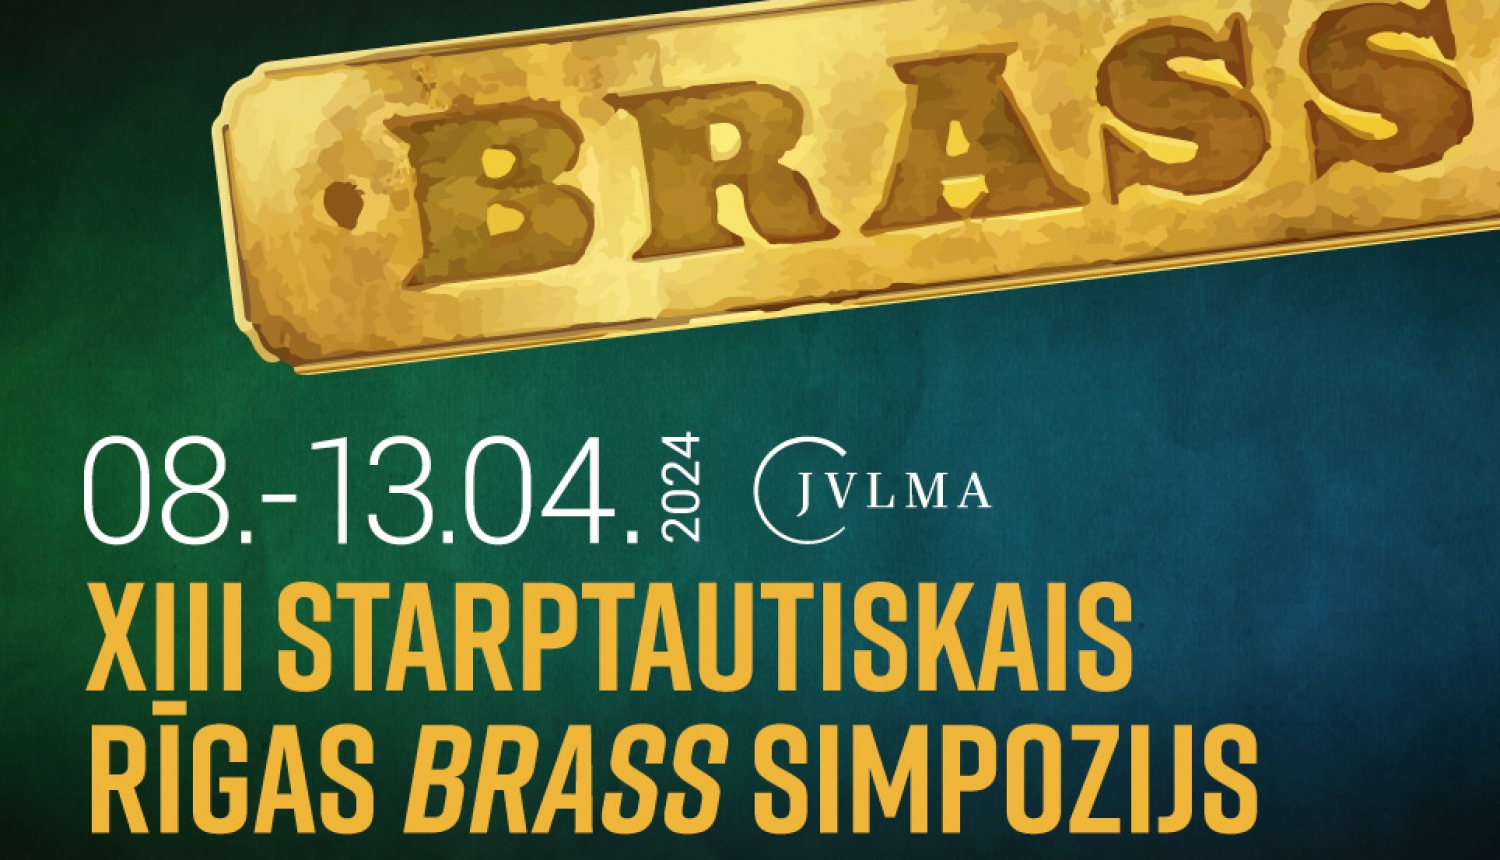 “Rīgas Brass simpozijs” afiša